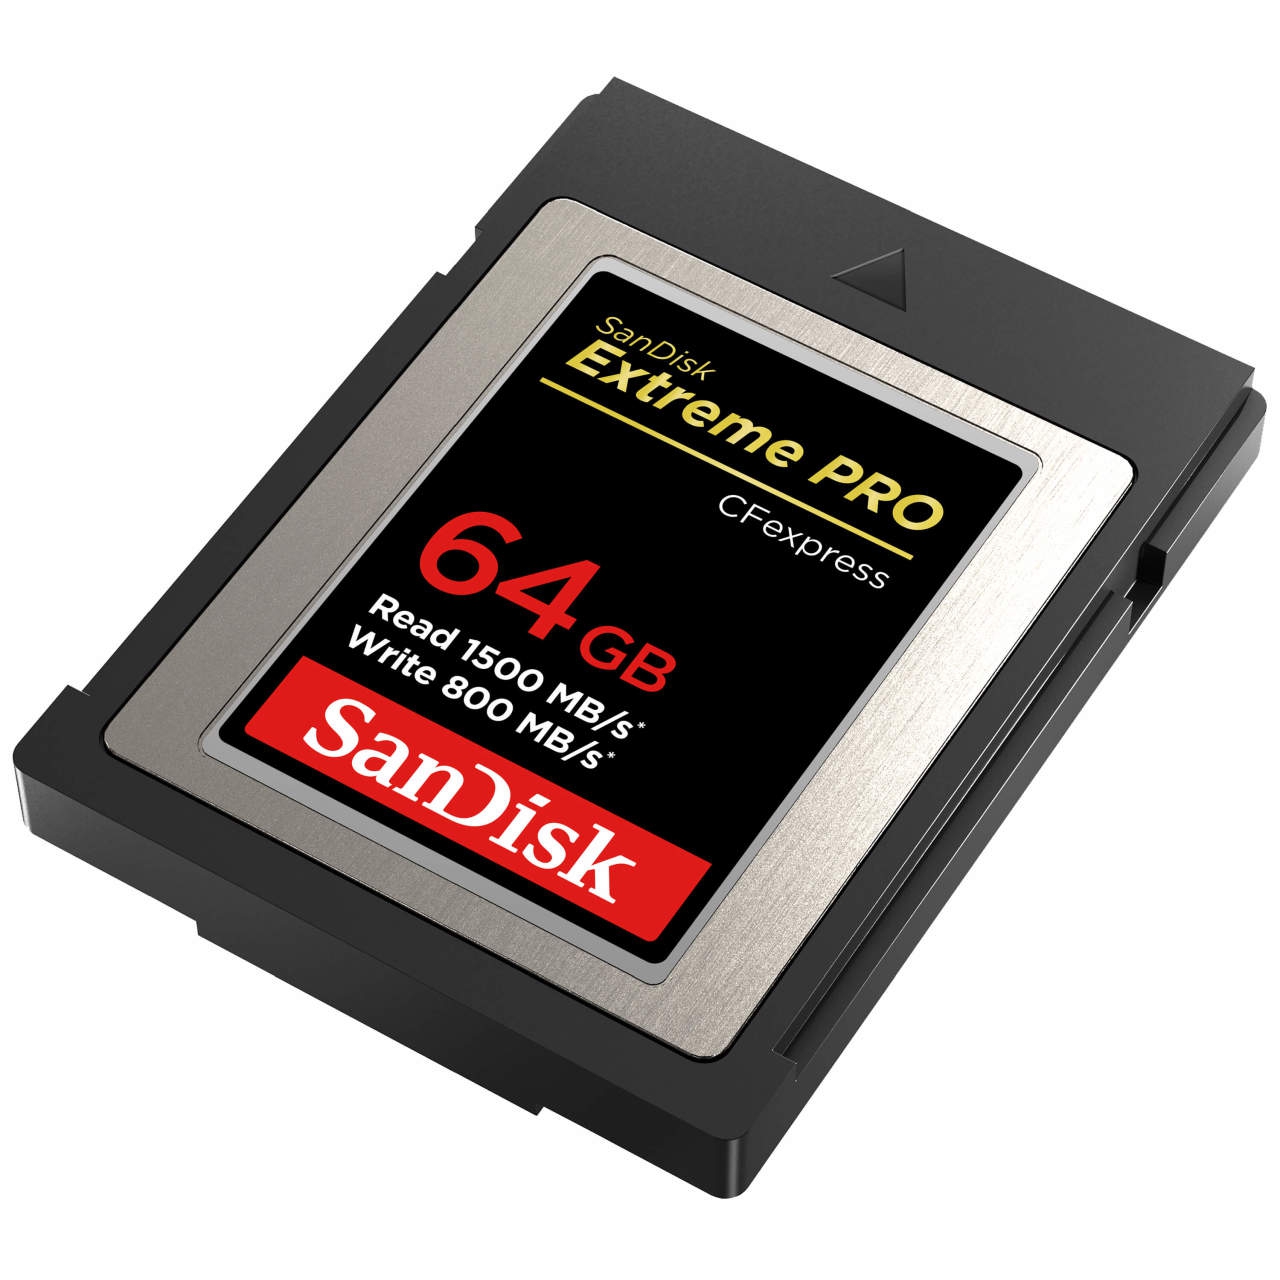 SanDisk 64GB Extreme PRO CFexpress Hafıza Kartı (XQD)